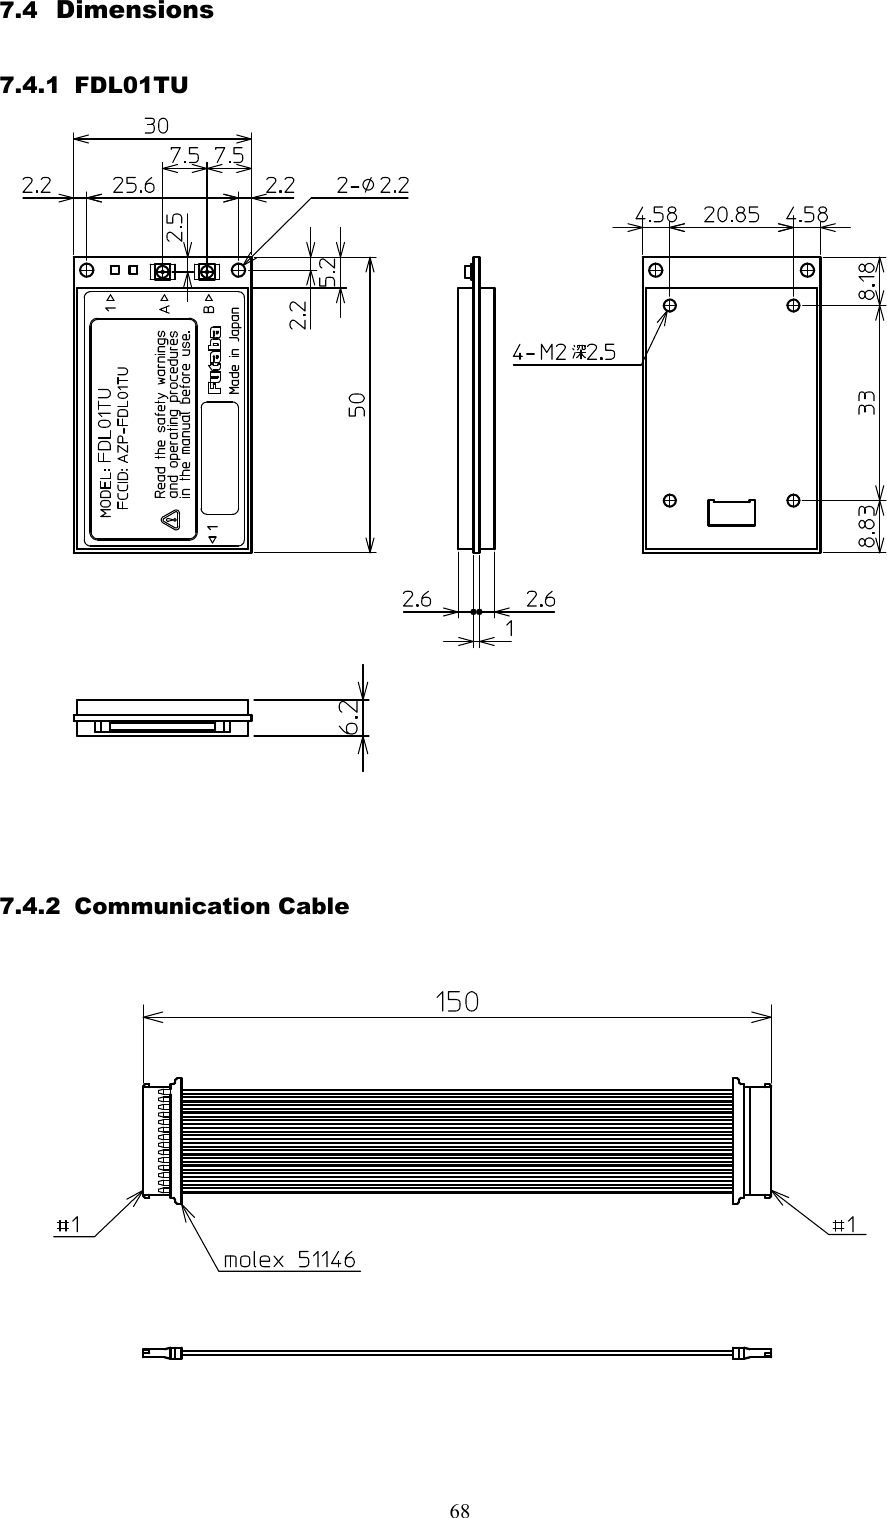    687.4  Dimensions 7.4.1  FDL01TU                           7.4.2  Communication Cable      